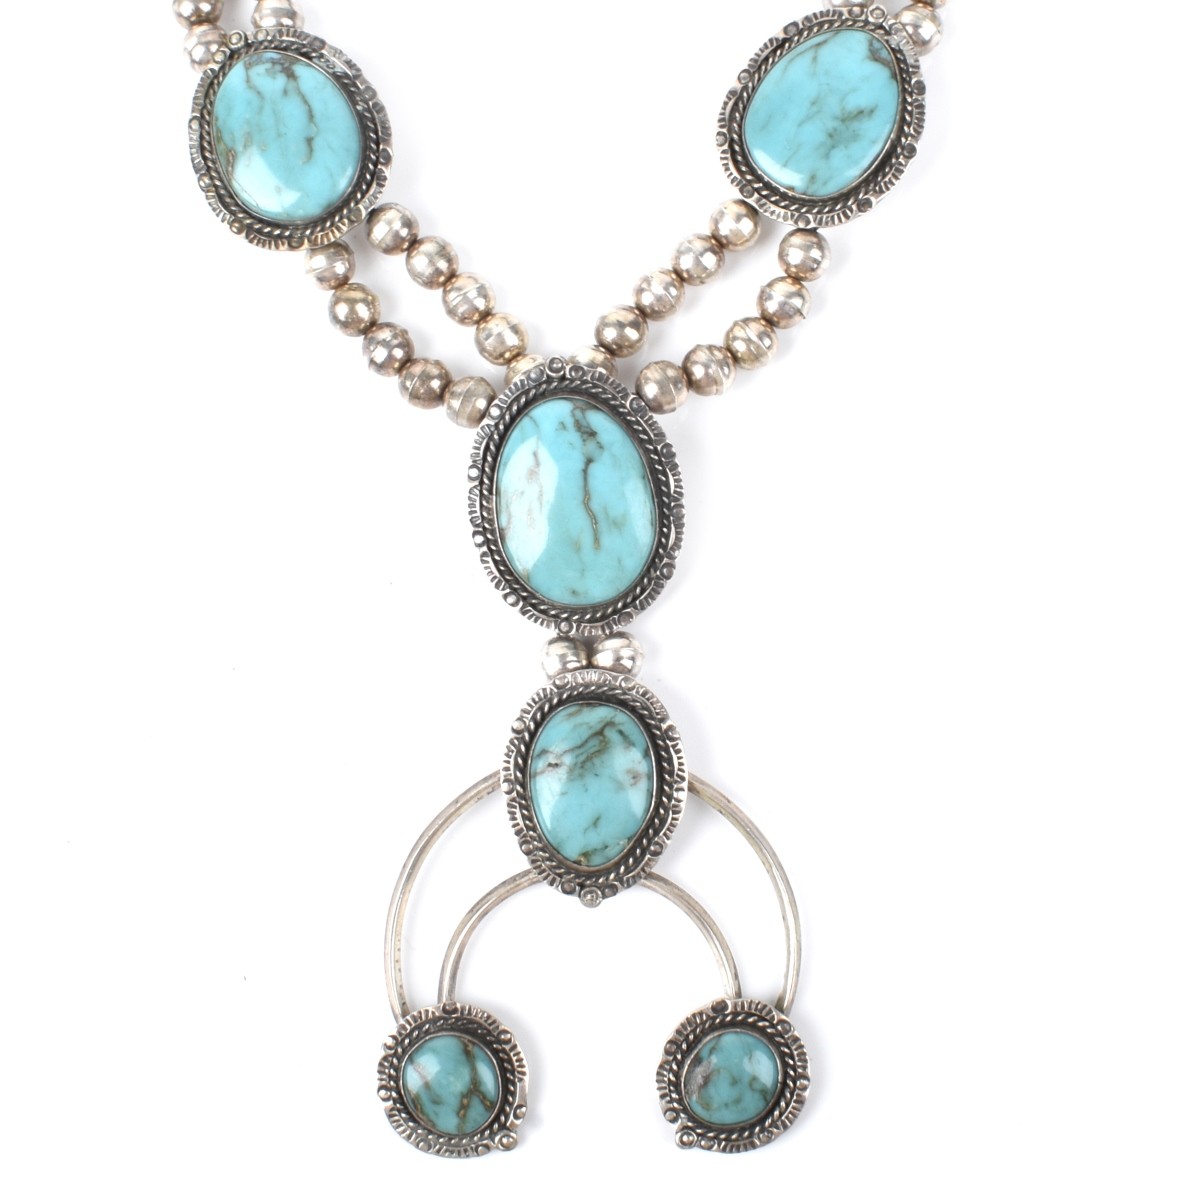 Vintage Native American Sterling Silver Necklace